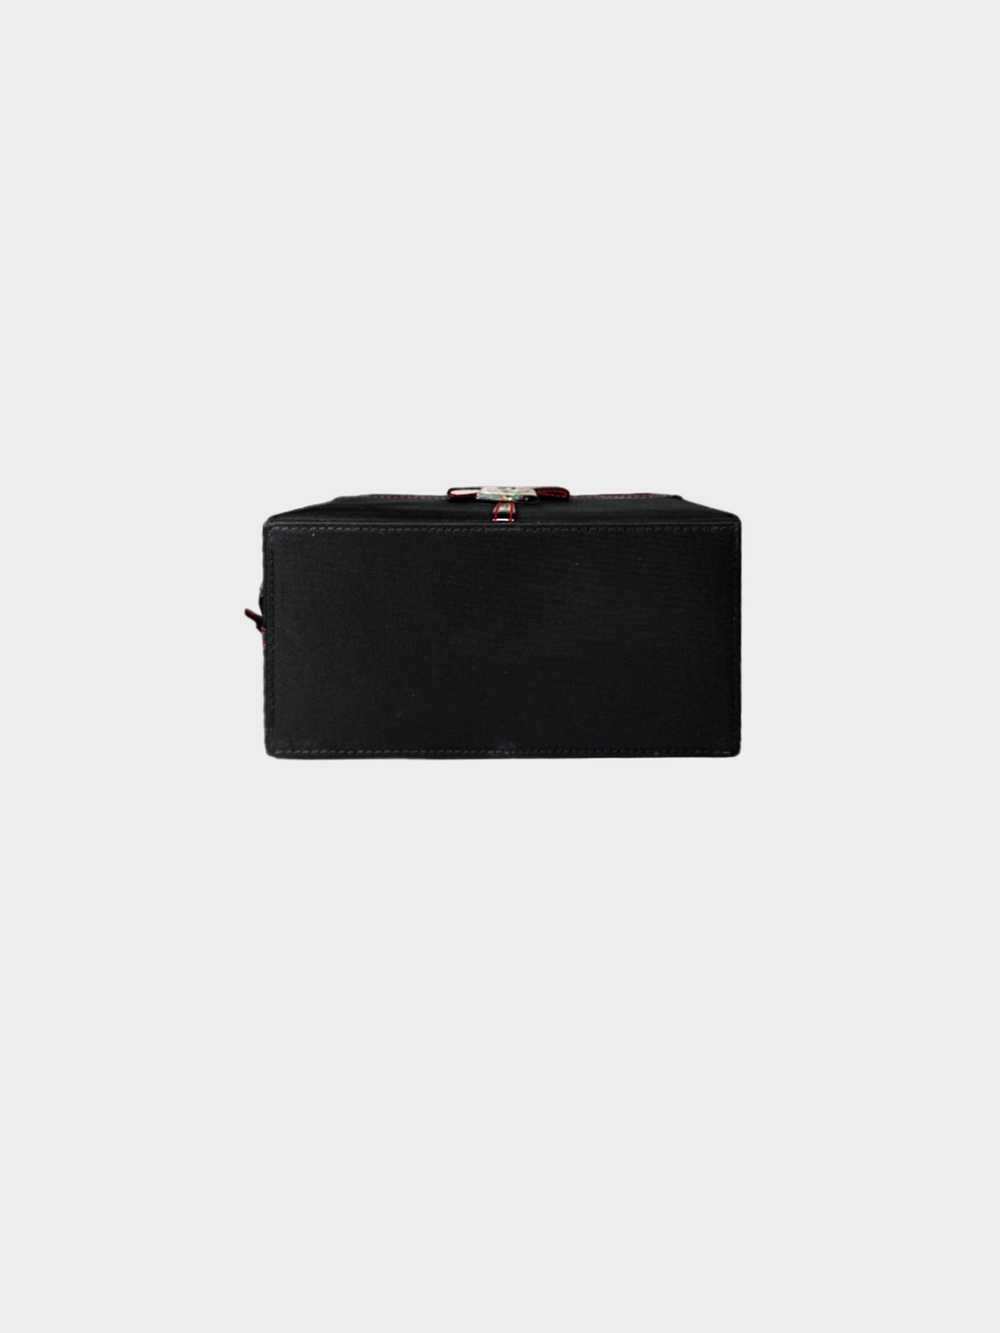 Christian Dior 2006 Black Ribbon Box Vanity Bag - image 3